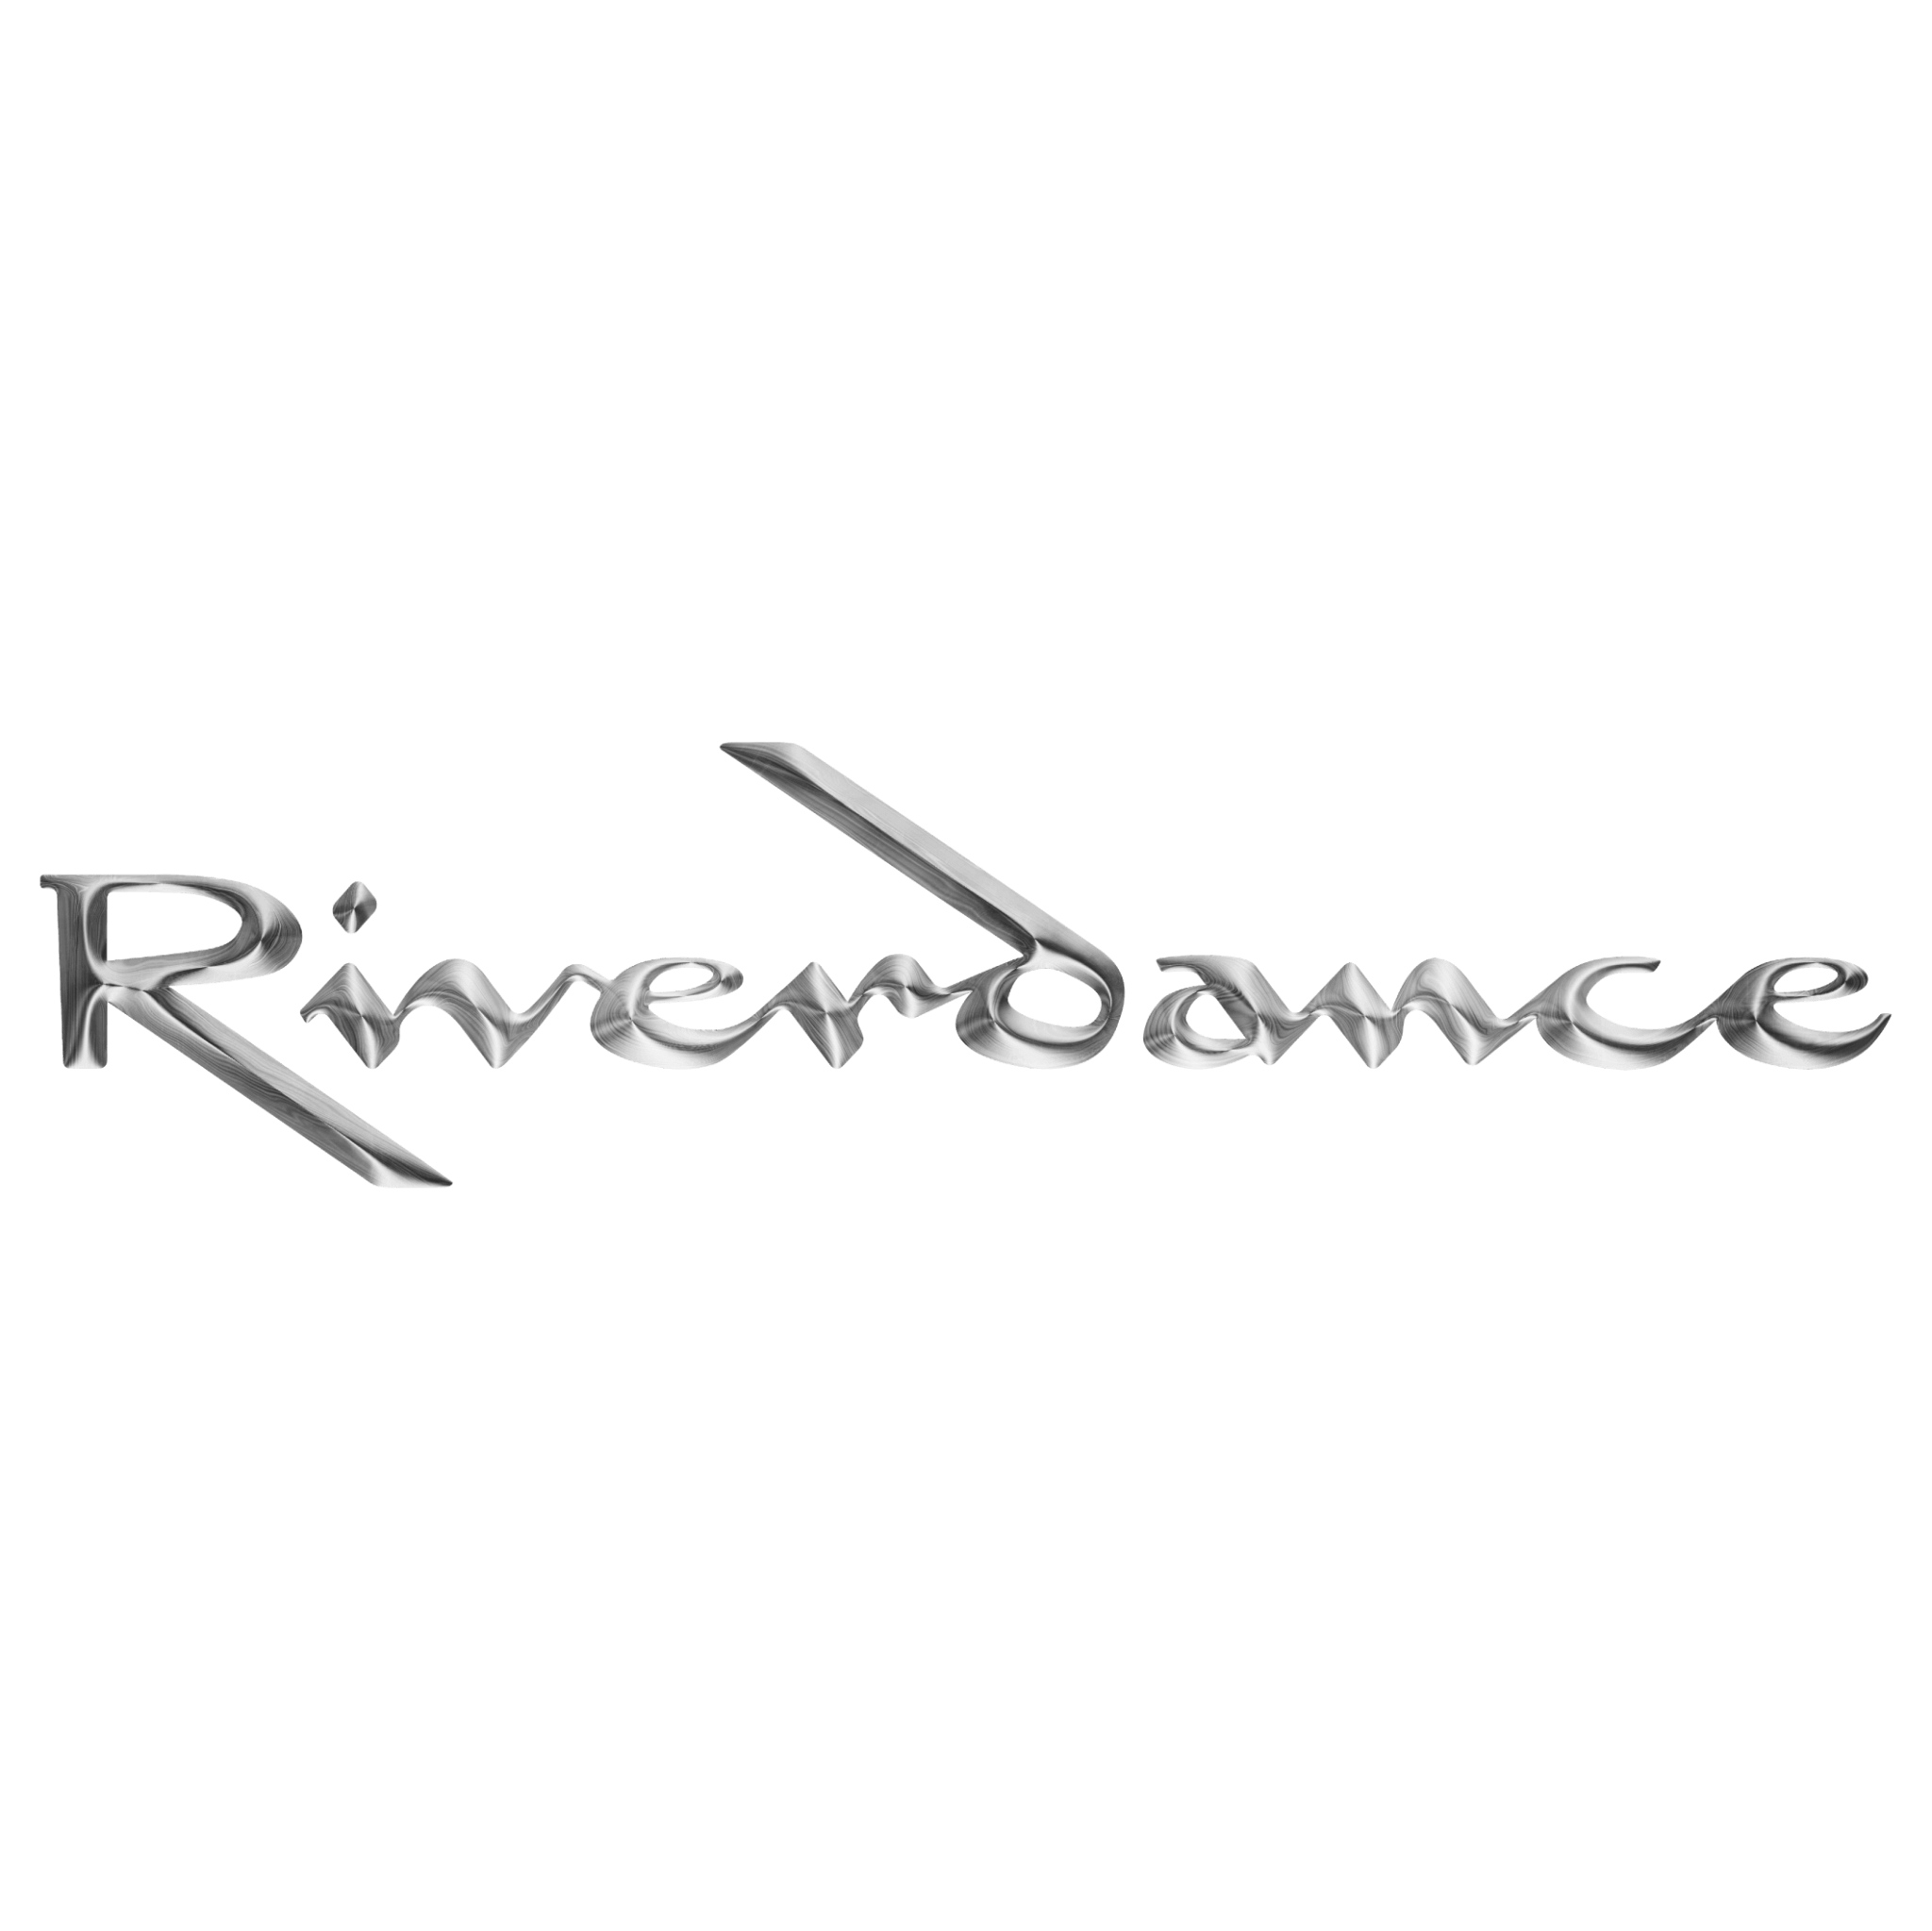 Riverdance